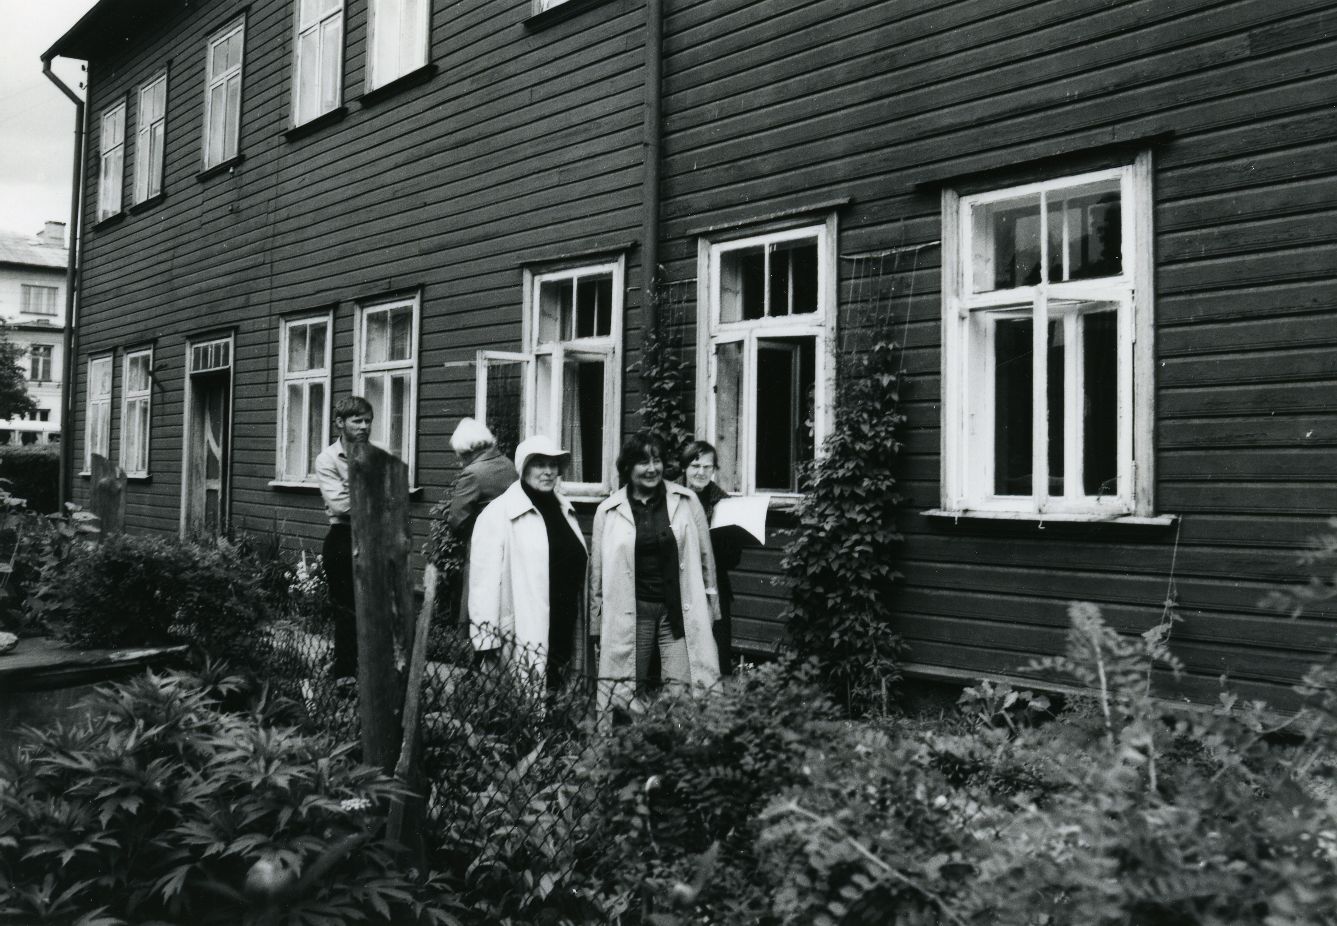 Betti Alver in his former residence in Tartu, Lucki tn. 23. From the left: Betti Alver, Velli Verev, Linda Nigul, Renate Tamm (back) 1982.